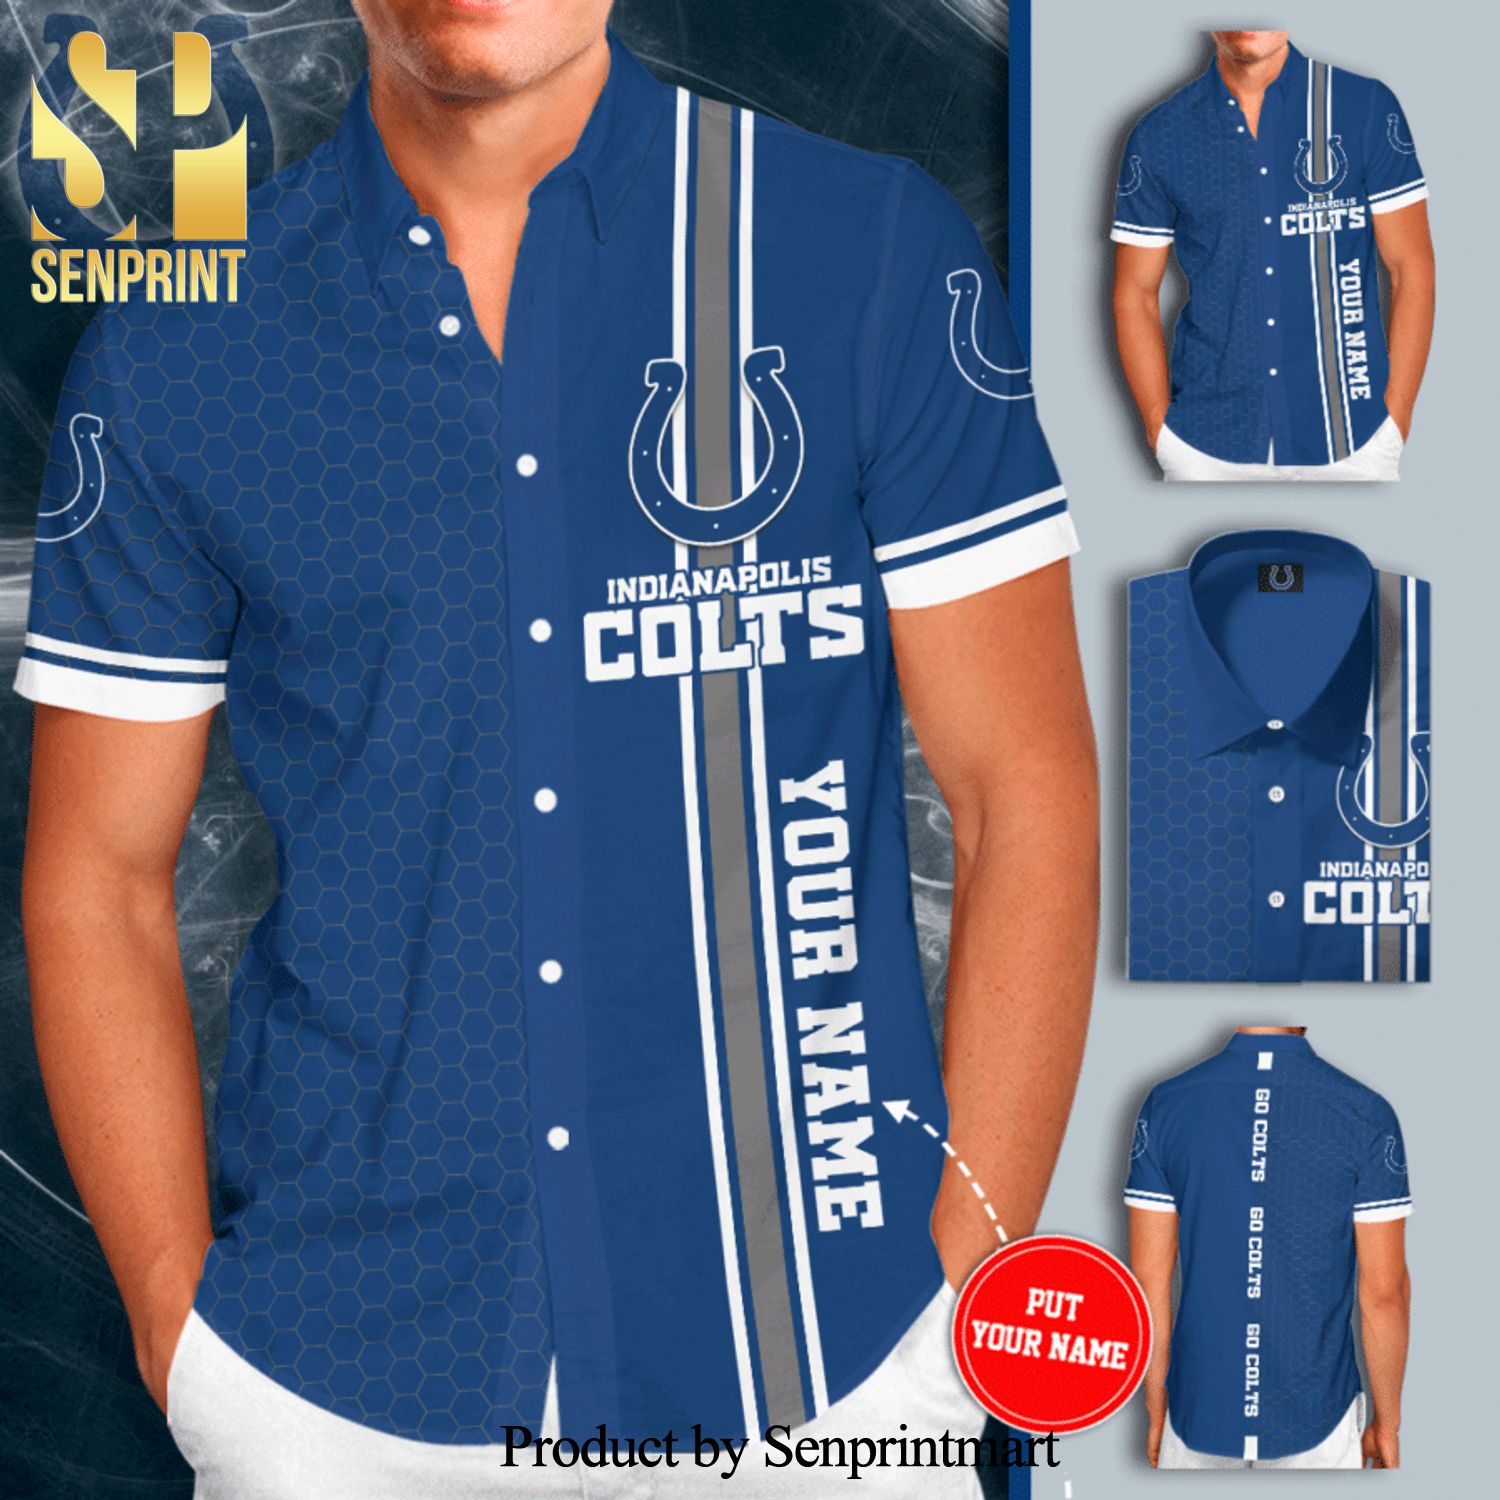 Personalized Indianapolis Colts Go Colts Full Printing Tiling Short Sleeve Dress Shirt Hawaiian Summer Aloha Beach Shirt – Cobalt